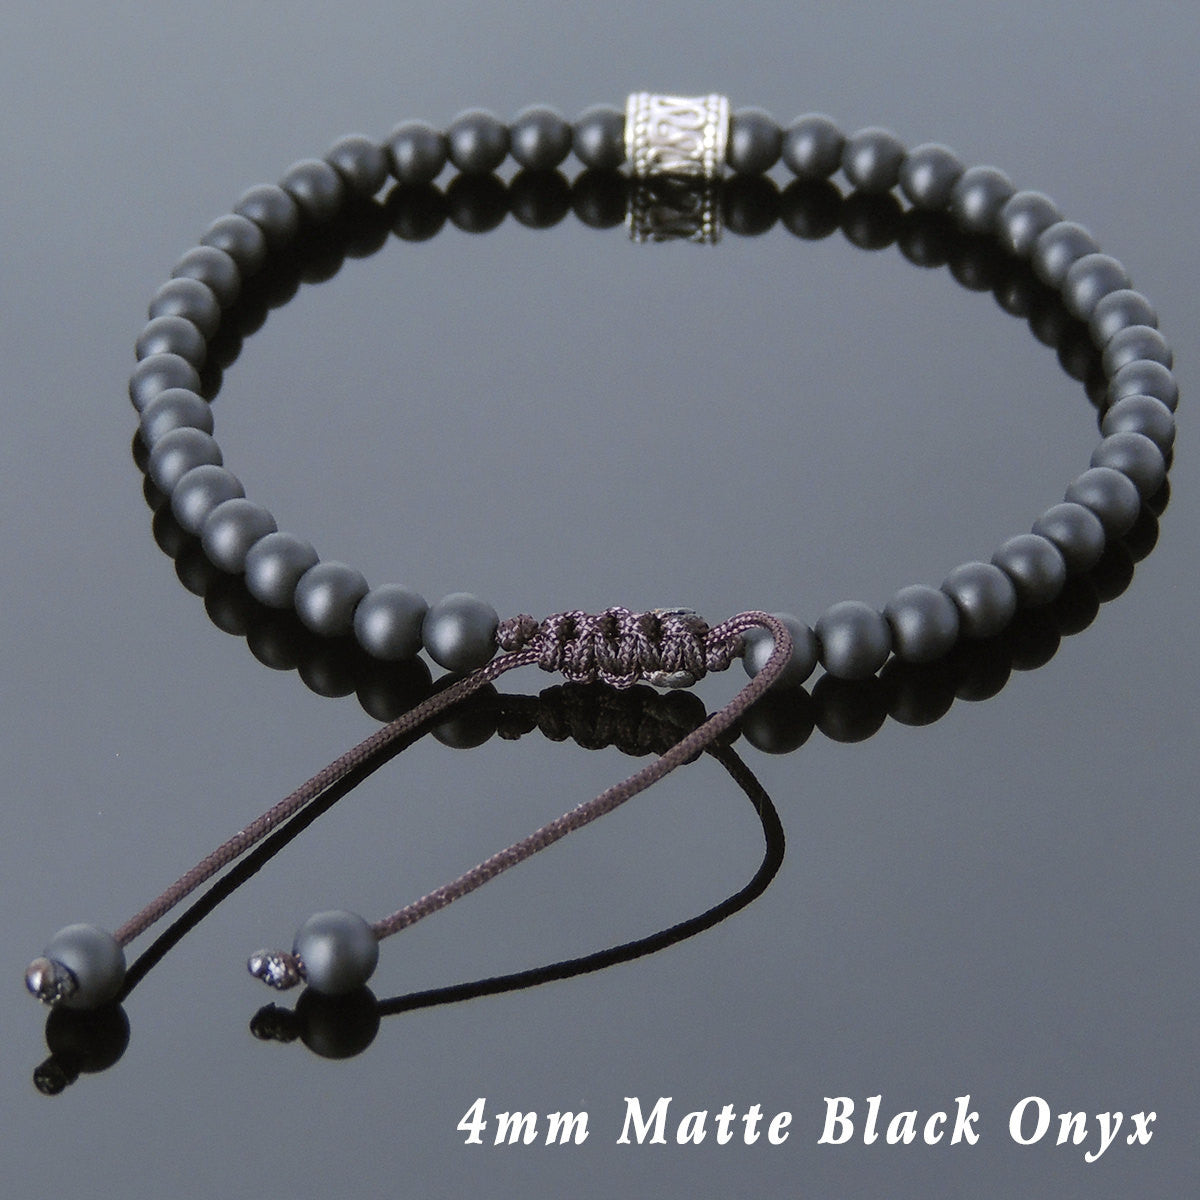 4mm Matte Black Onyx Adjustable Braided Healing Gemstone Bracelet with S925 Sterling Silver Artisan Barrel Bead - Handmade by Gem & Silver BR695